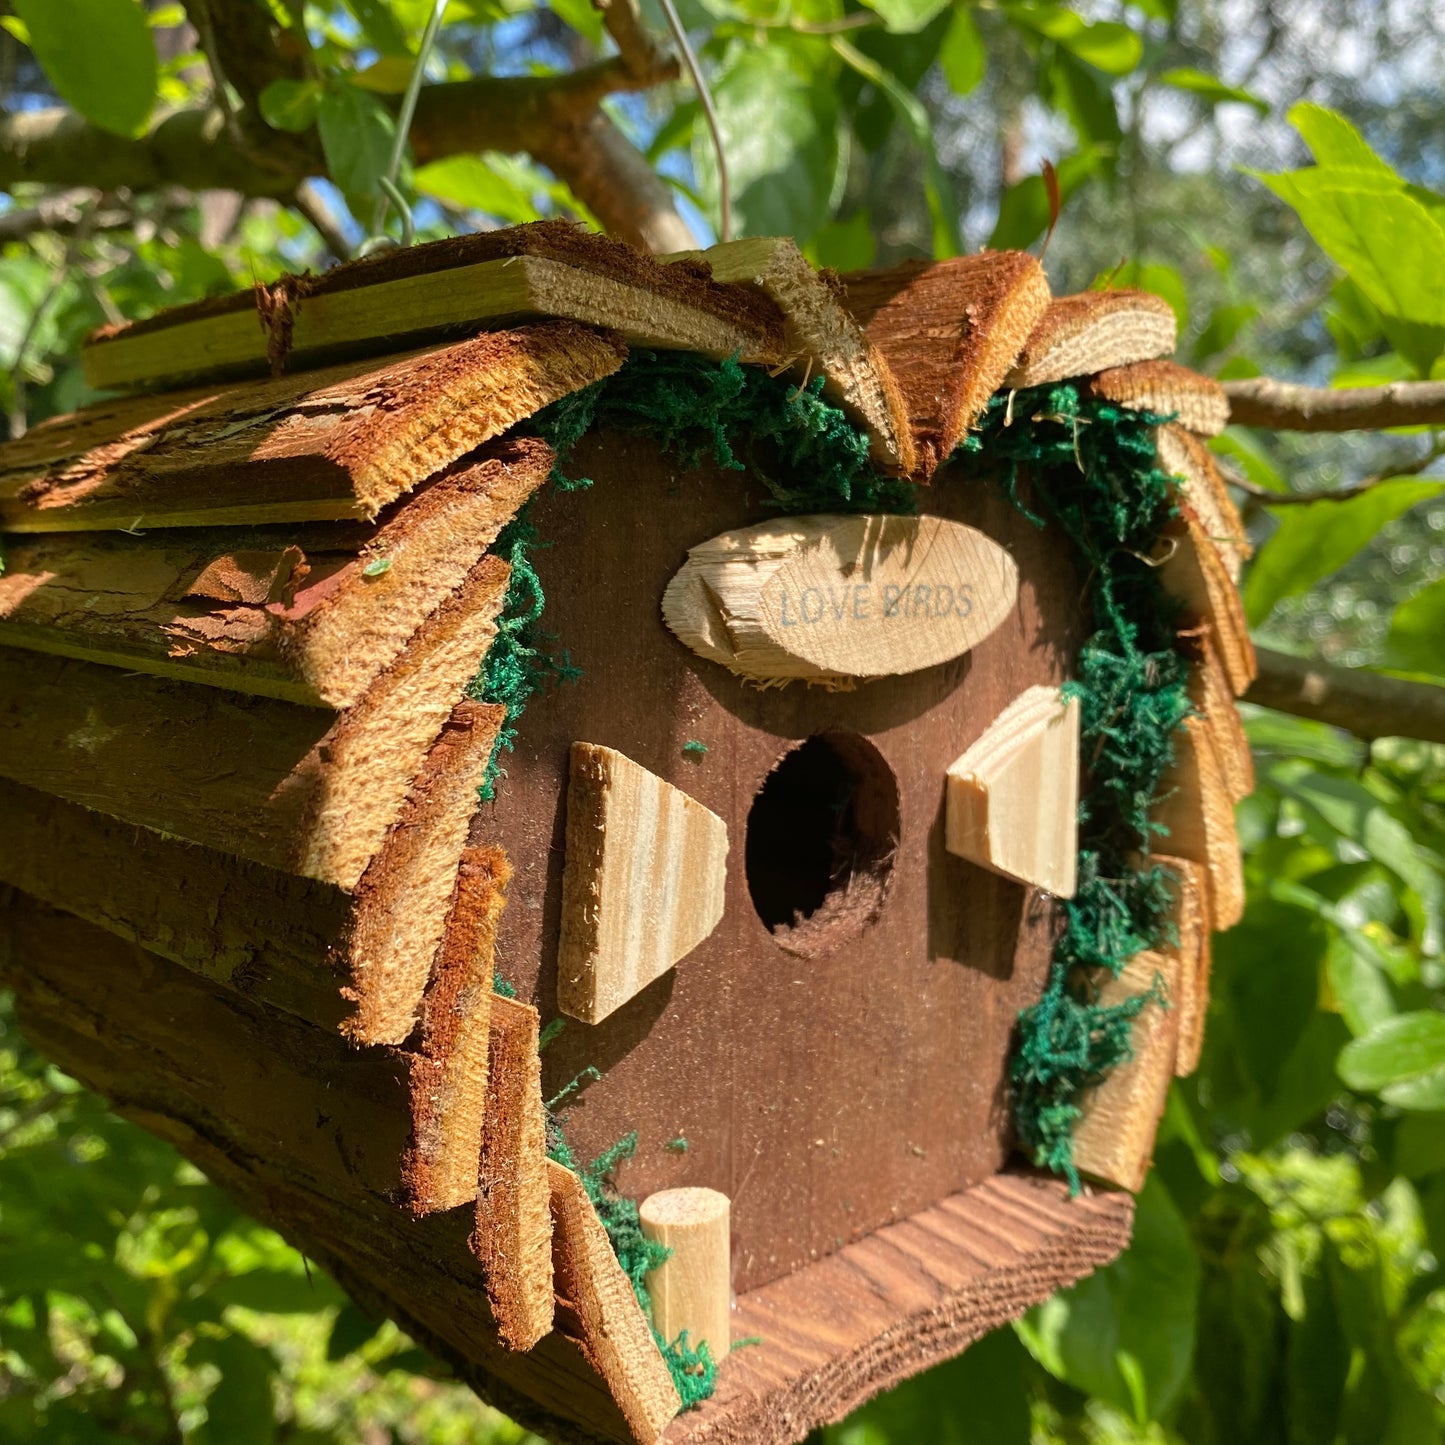 Hanging Wooden Love Bird Nest Box Birdhouse